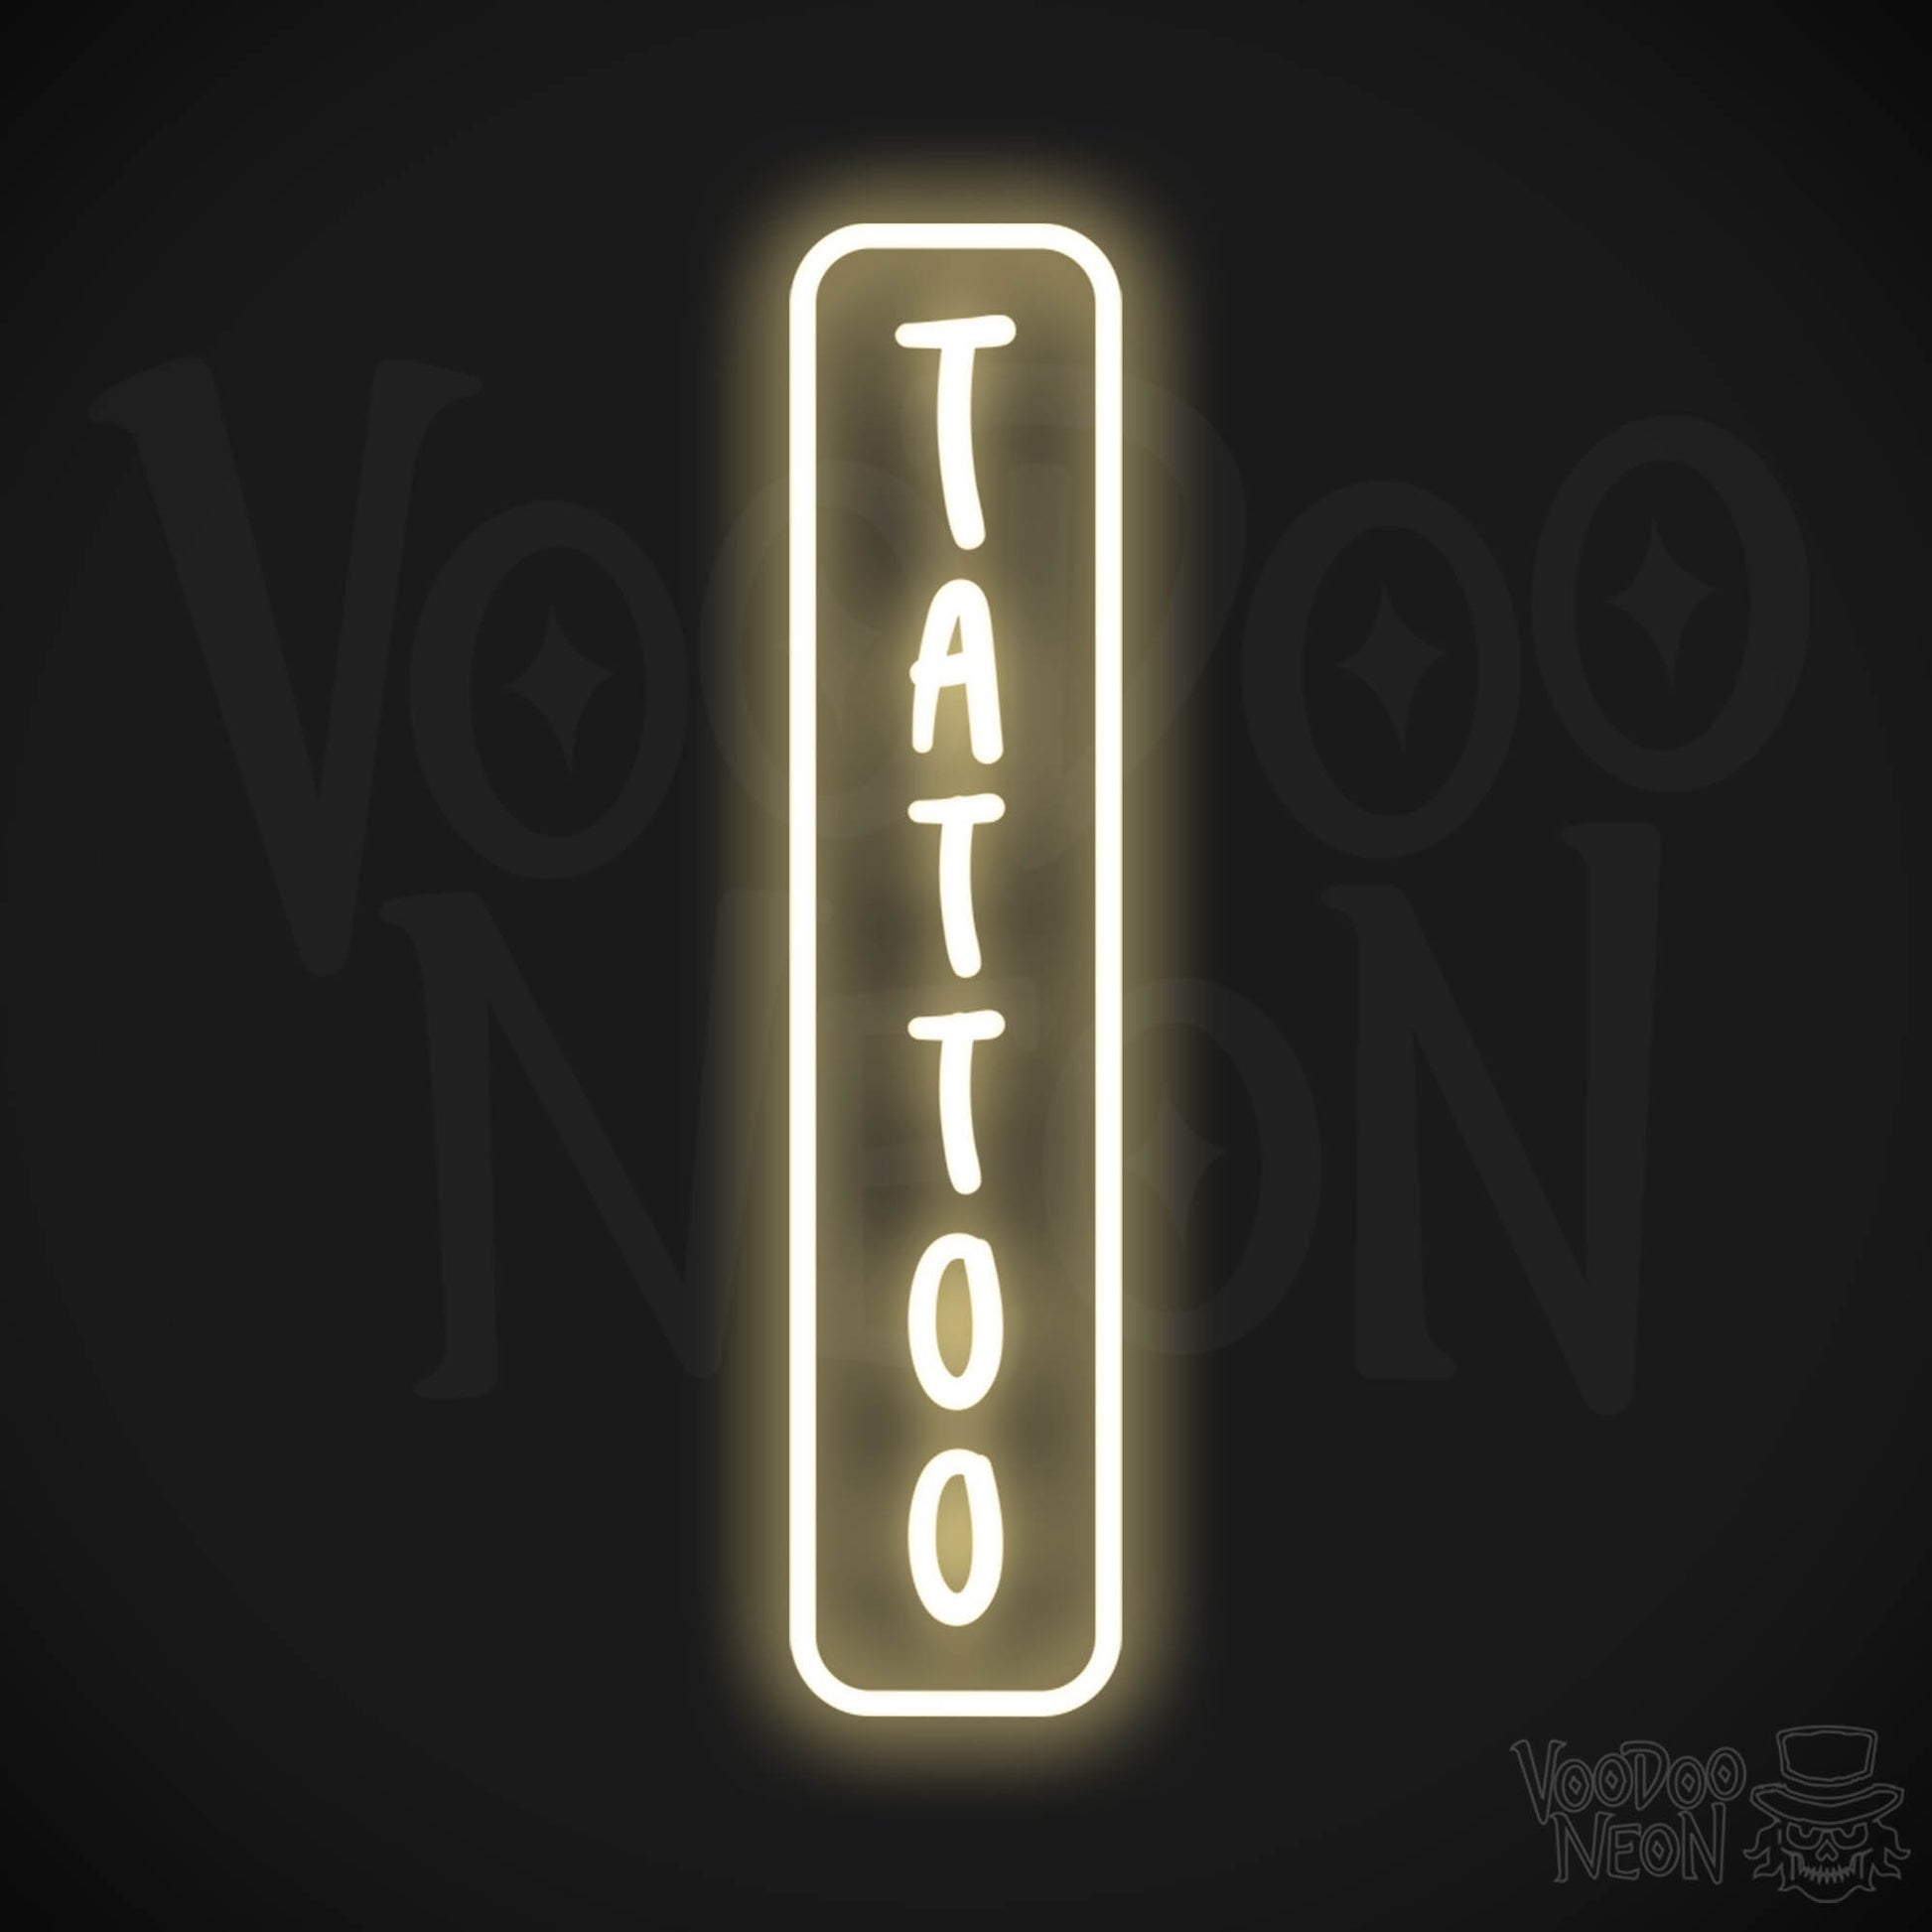 Tattoo LED Neon - Warm White